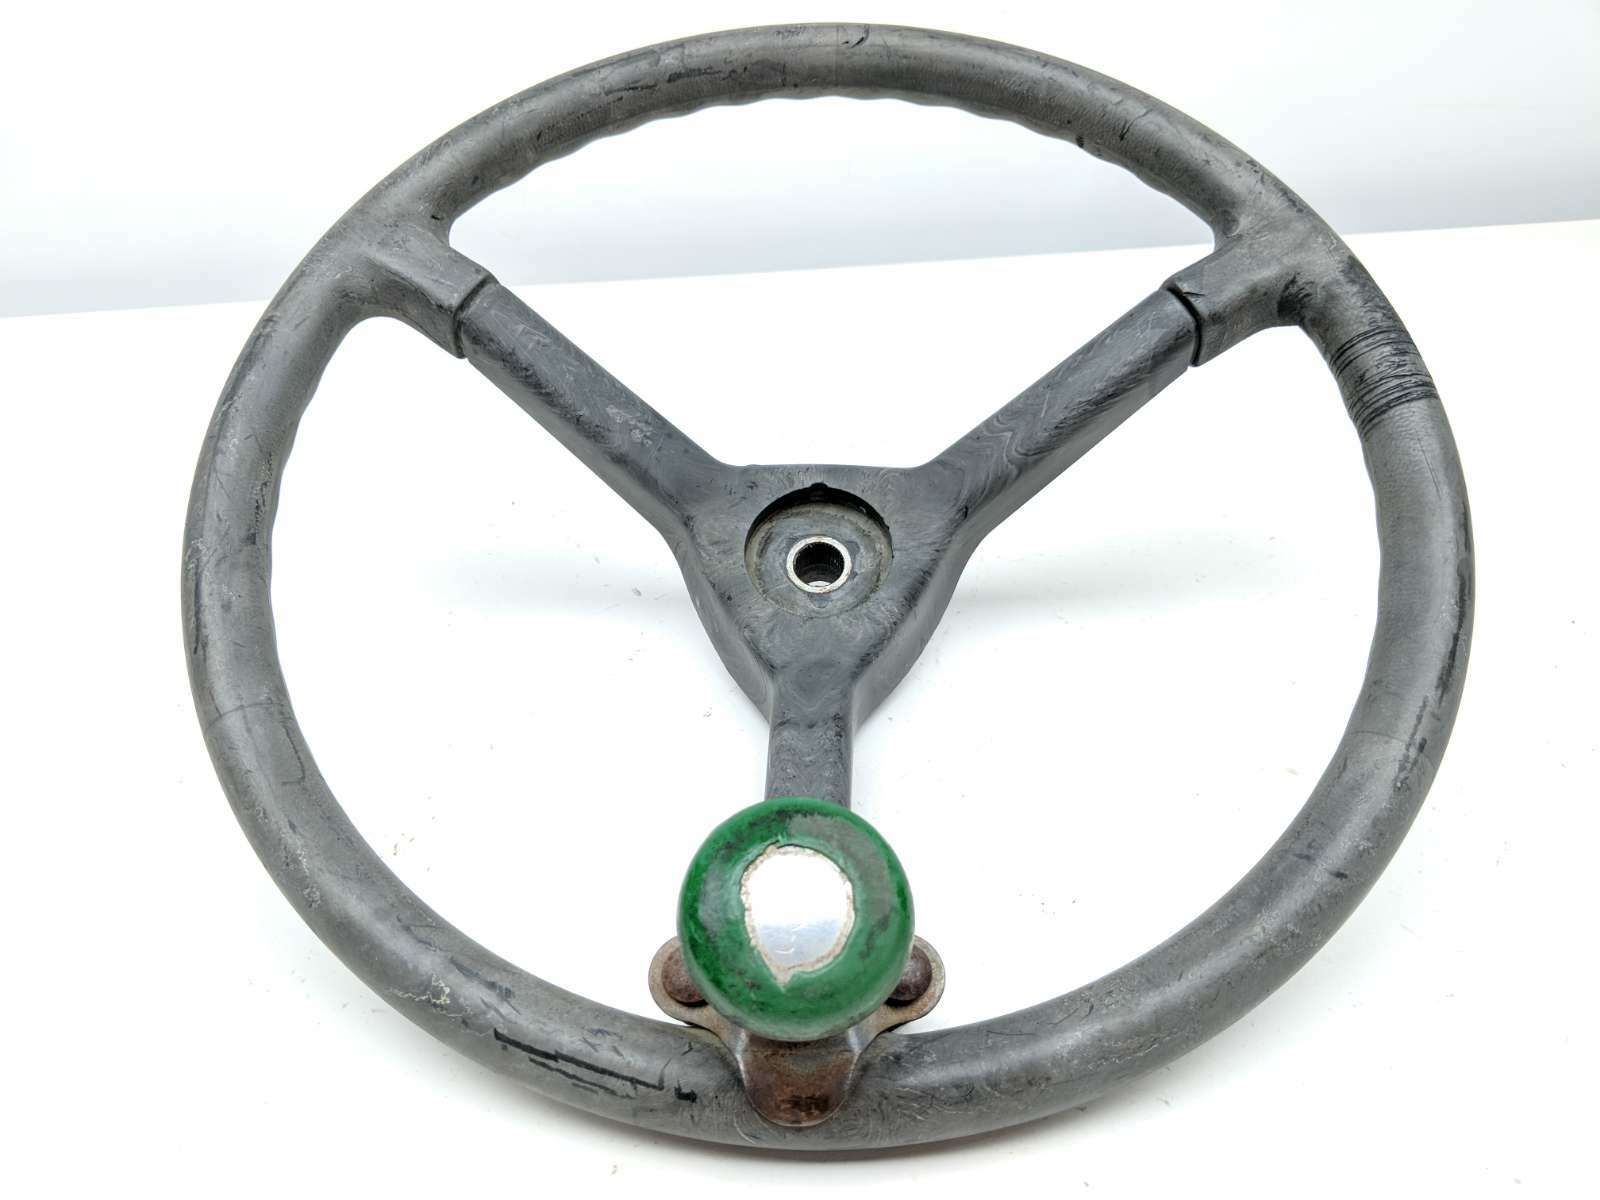 04 Polaris Ranger 500 Steering Wheel